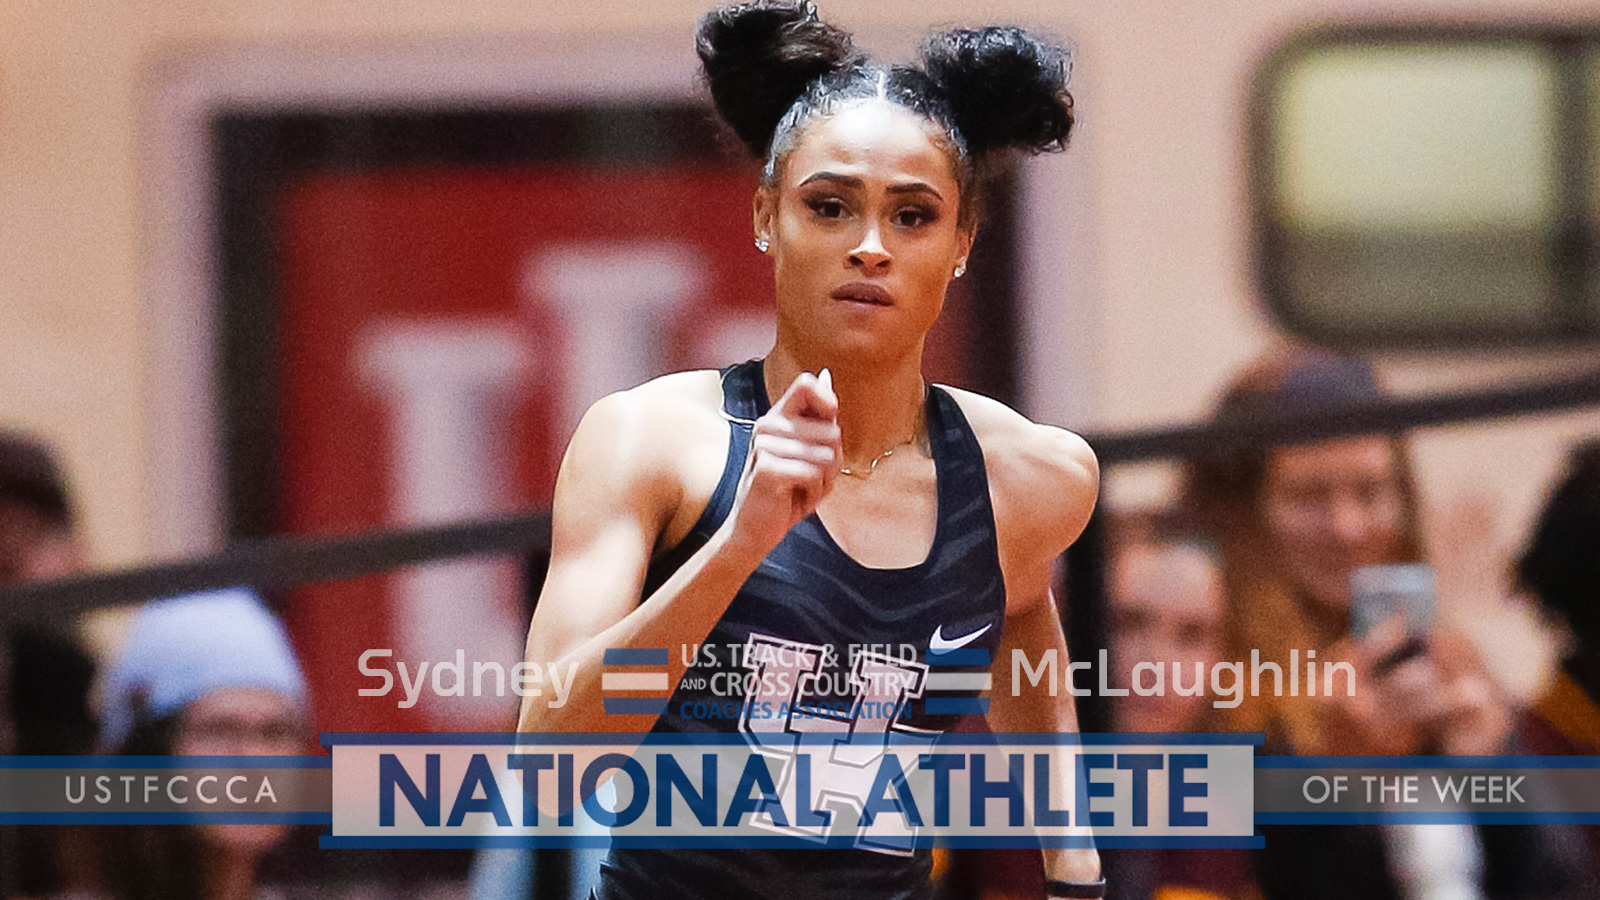 Sydney McLaughlin Named National Athlete of the Week